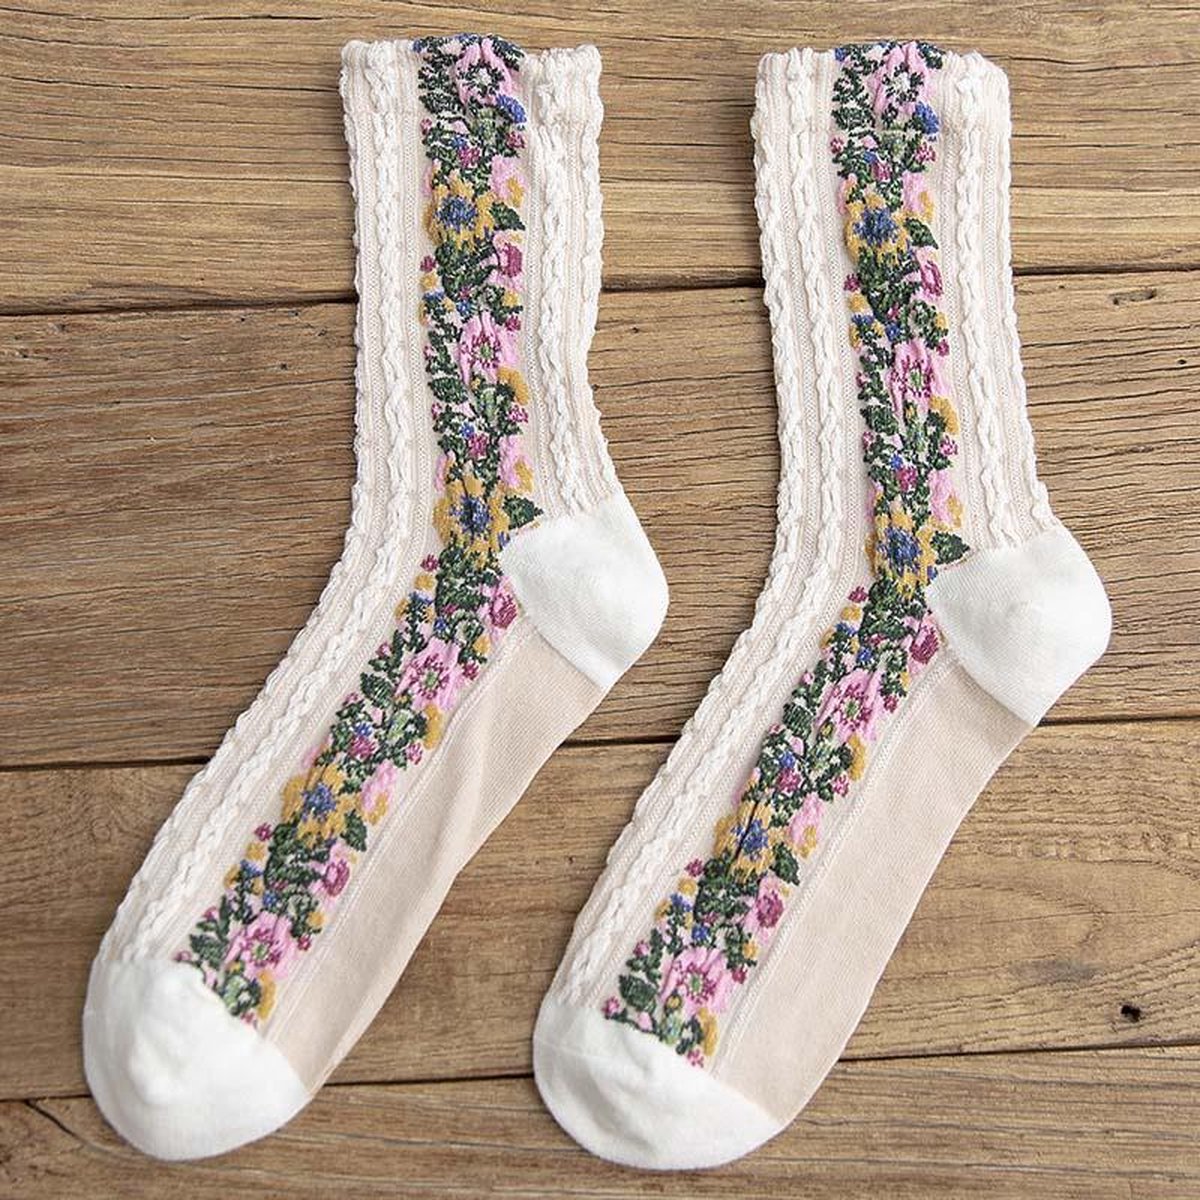 Harajuku sokken dames Met kabel en bloemen design Wit/roze - Granny socks bol.com